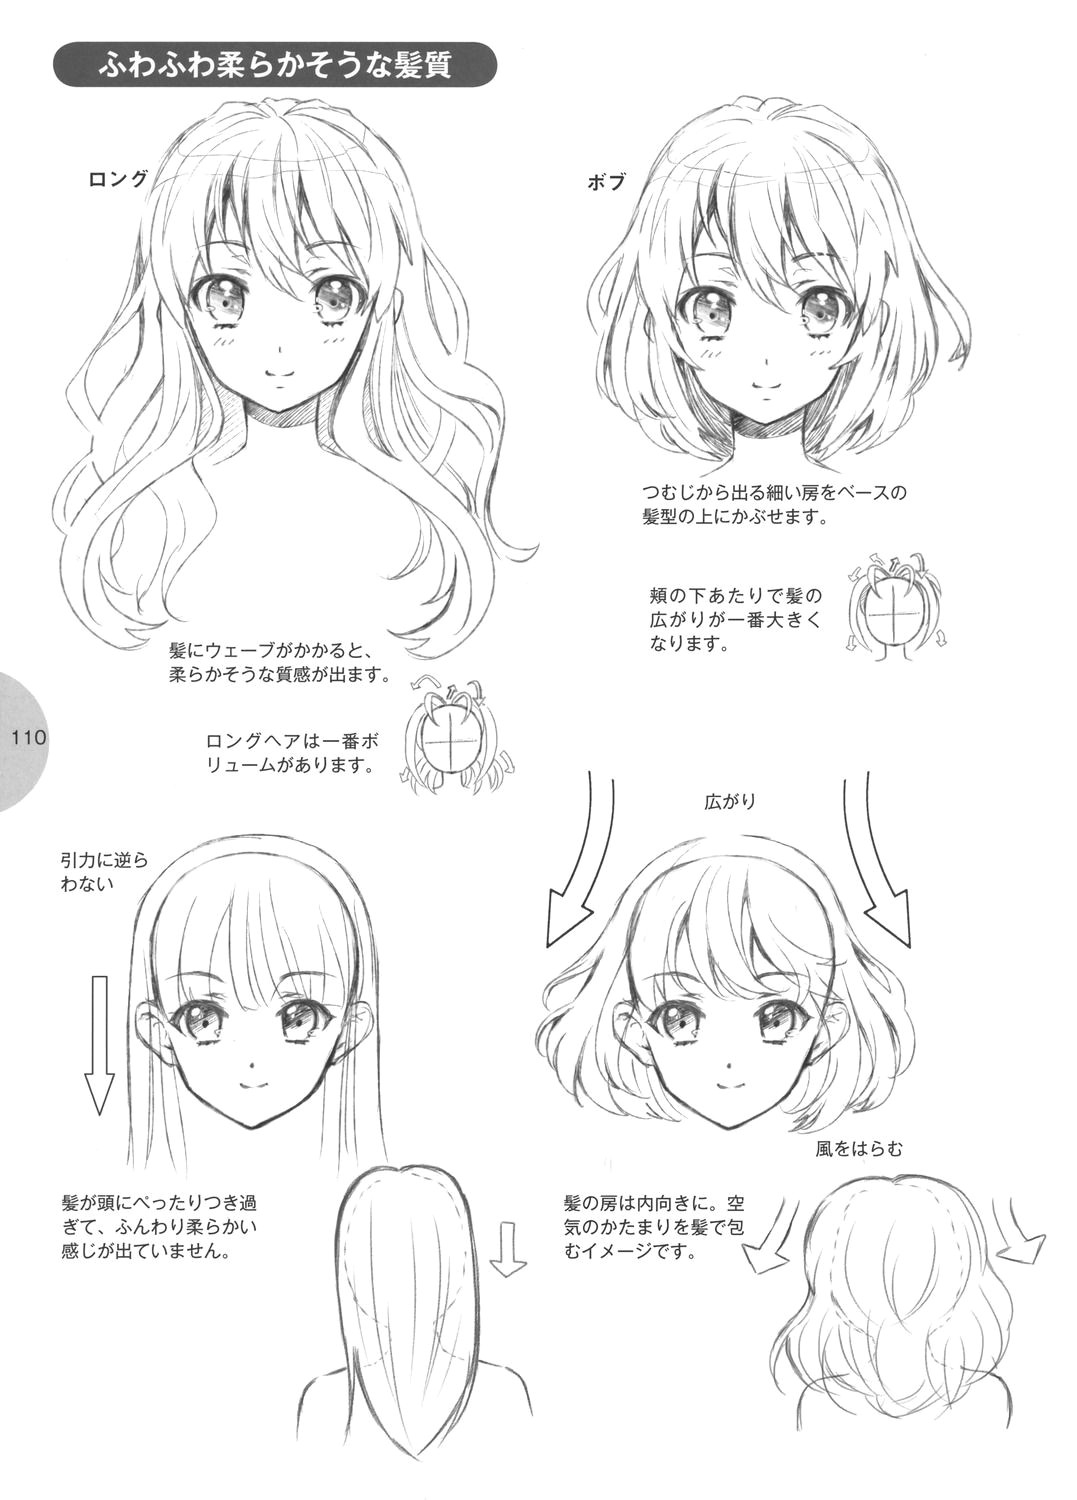 How to Draw Hair On Anime Tutorial Hair Manga Hair How to Draw Hair Anime Hair